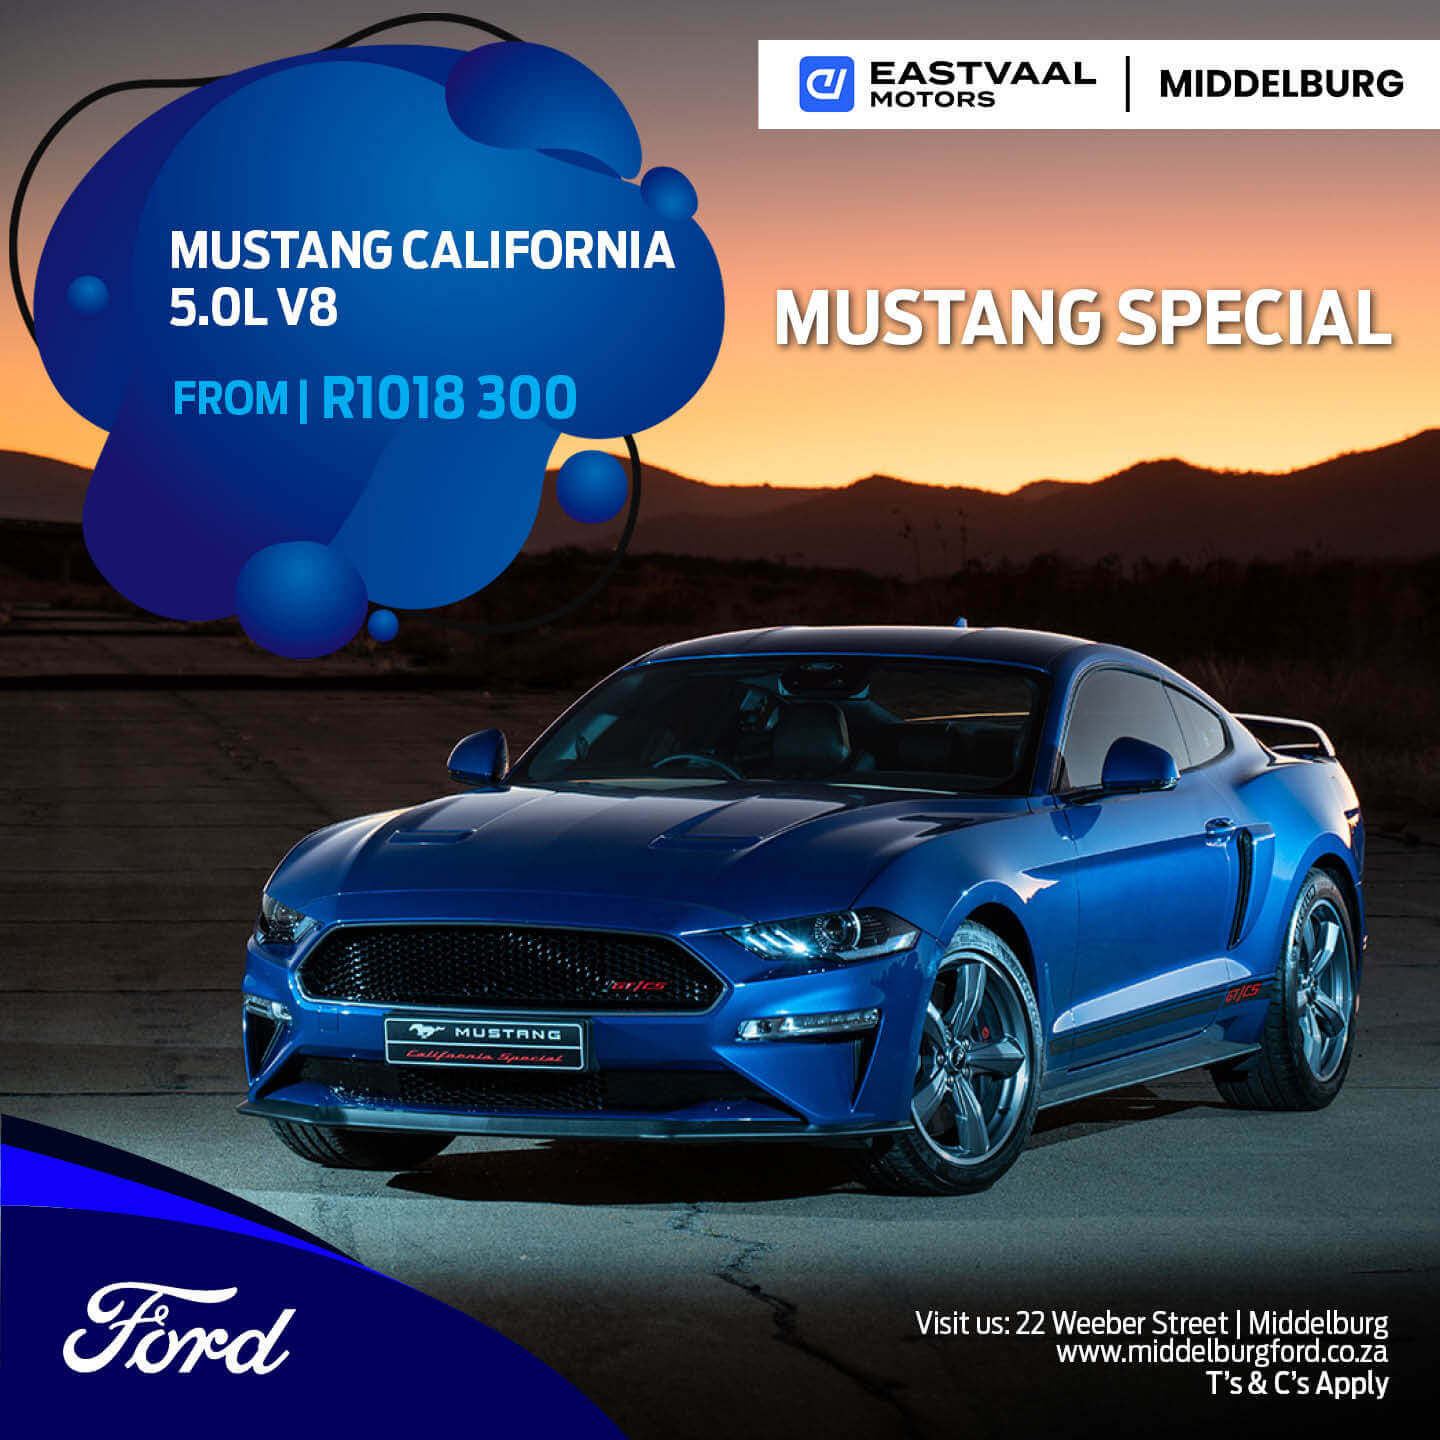 MUSTANG CALIFORNIA image from Eastvaal Motors